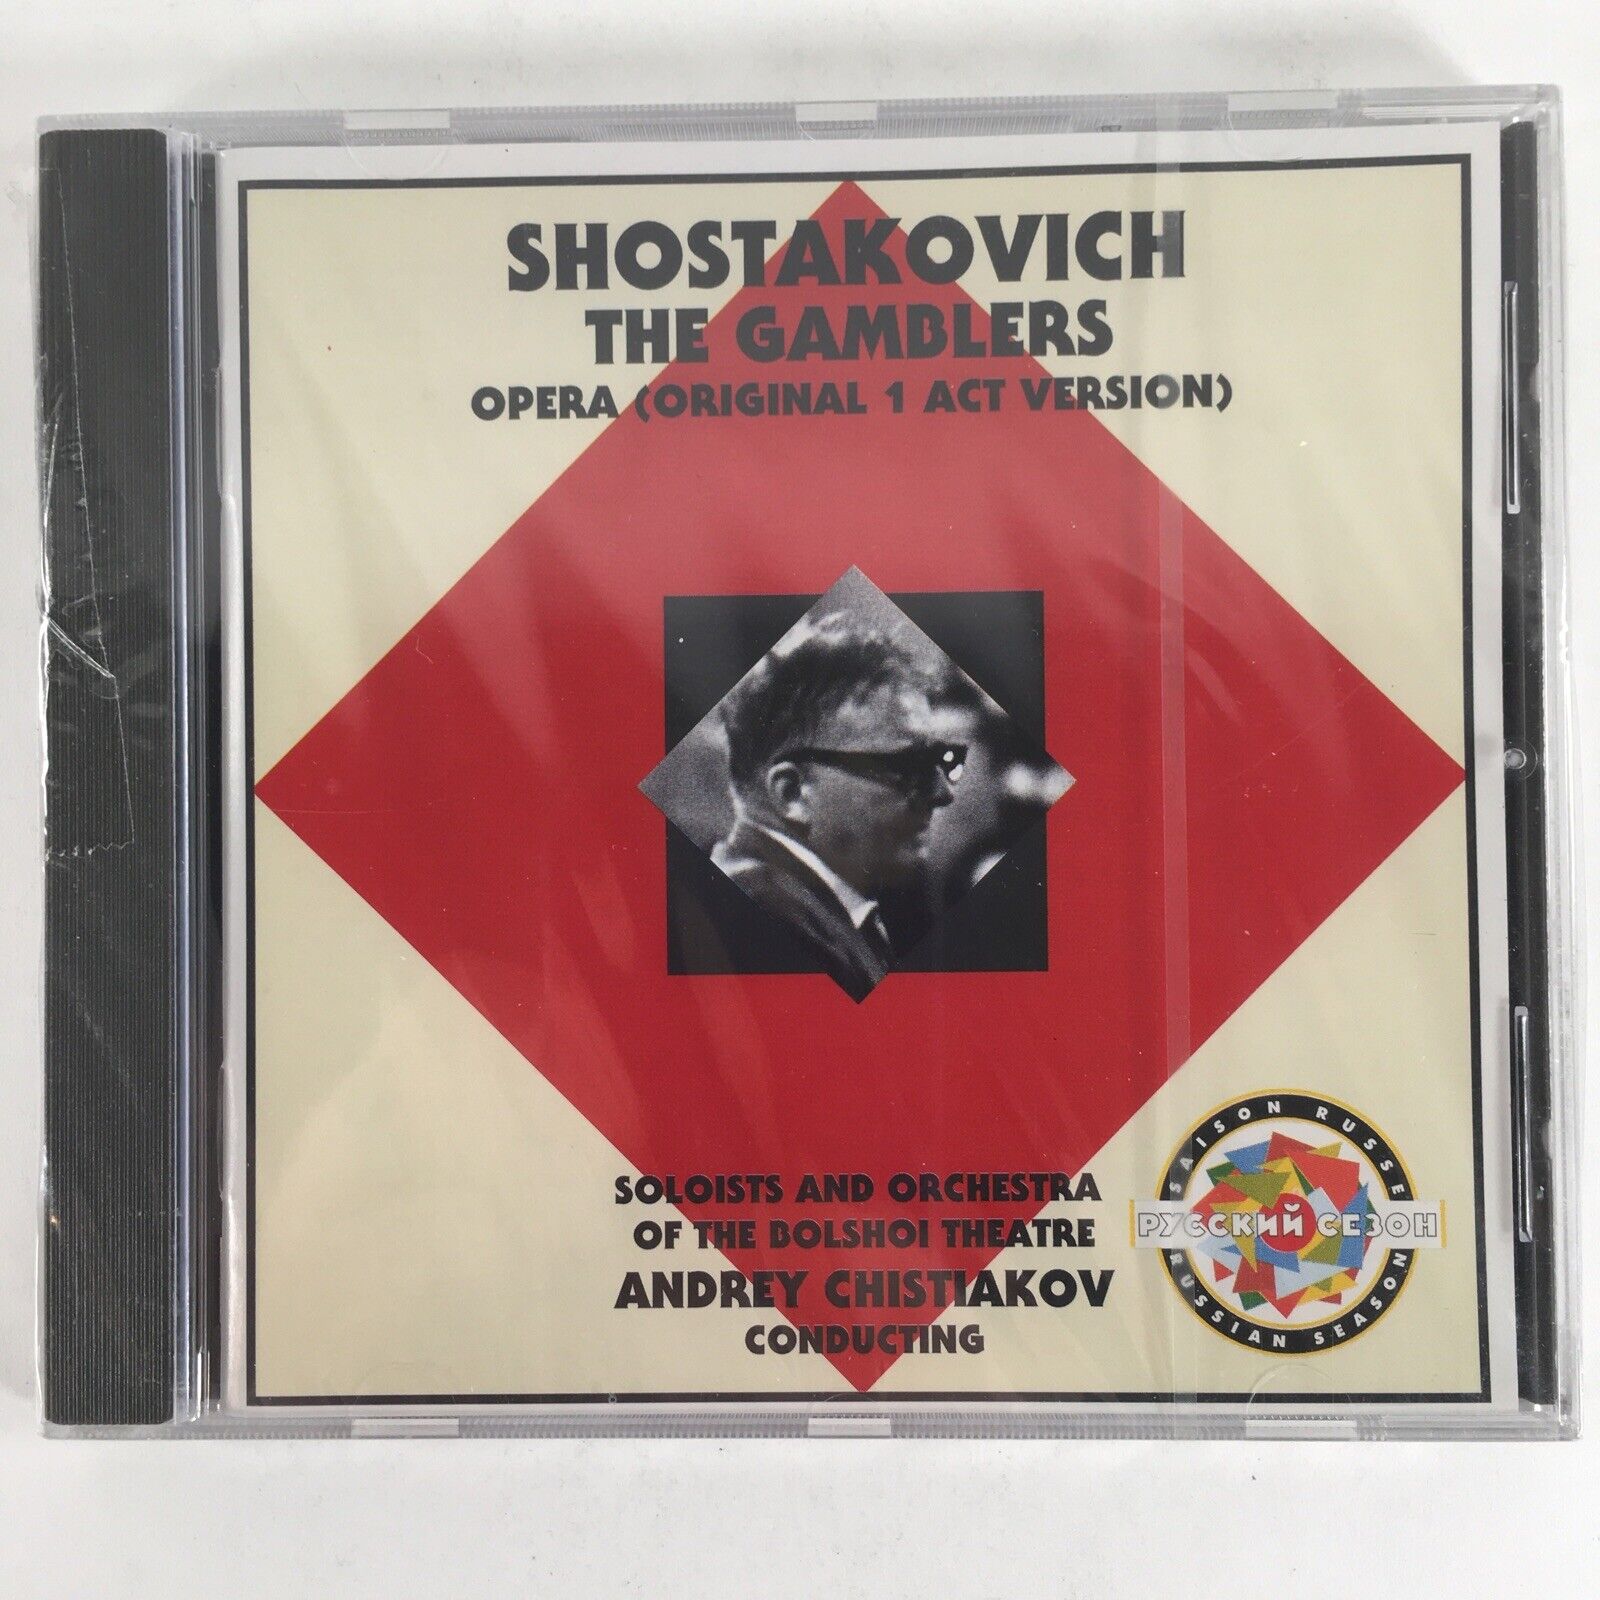 Shostakovich: The Gamblers CD Opera Original 1 Act Bolshoi Andrey  Christiakov 794881334322 | eBay